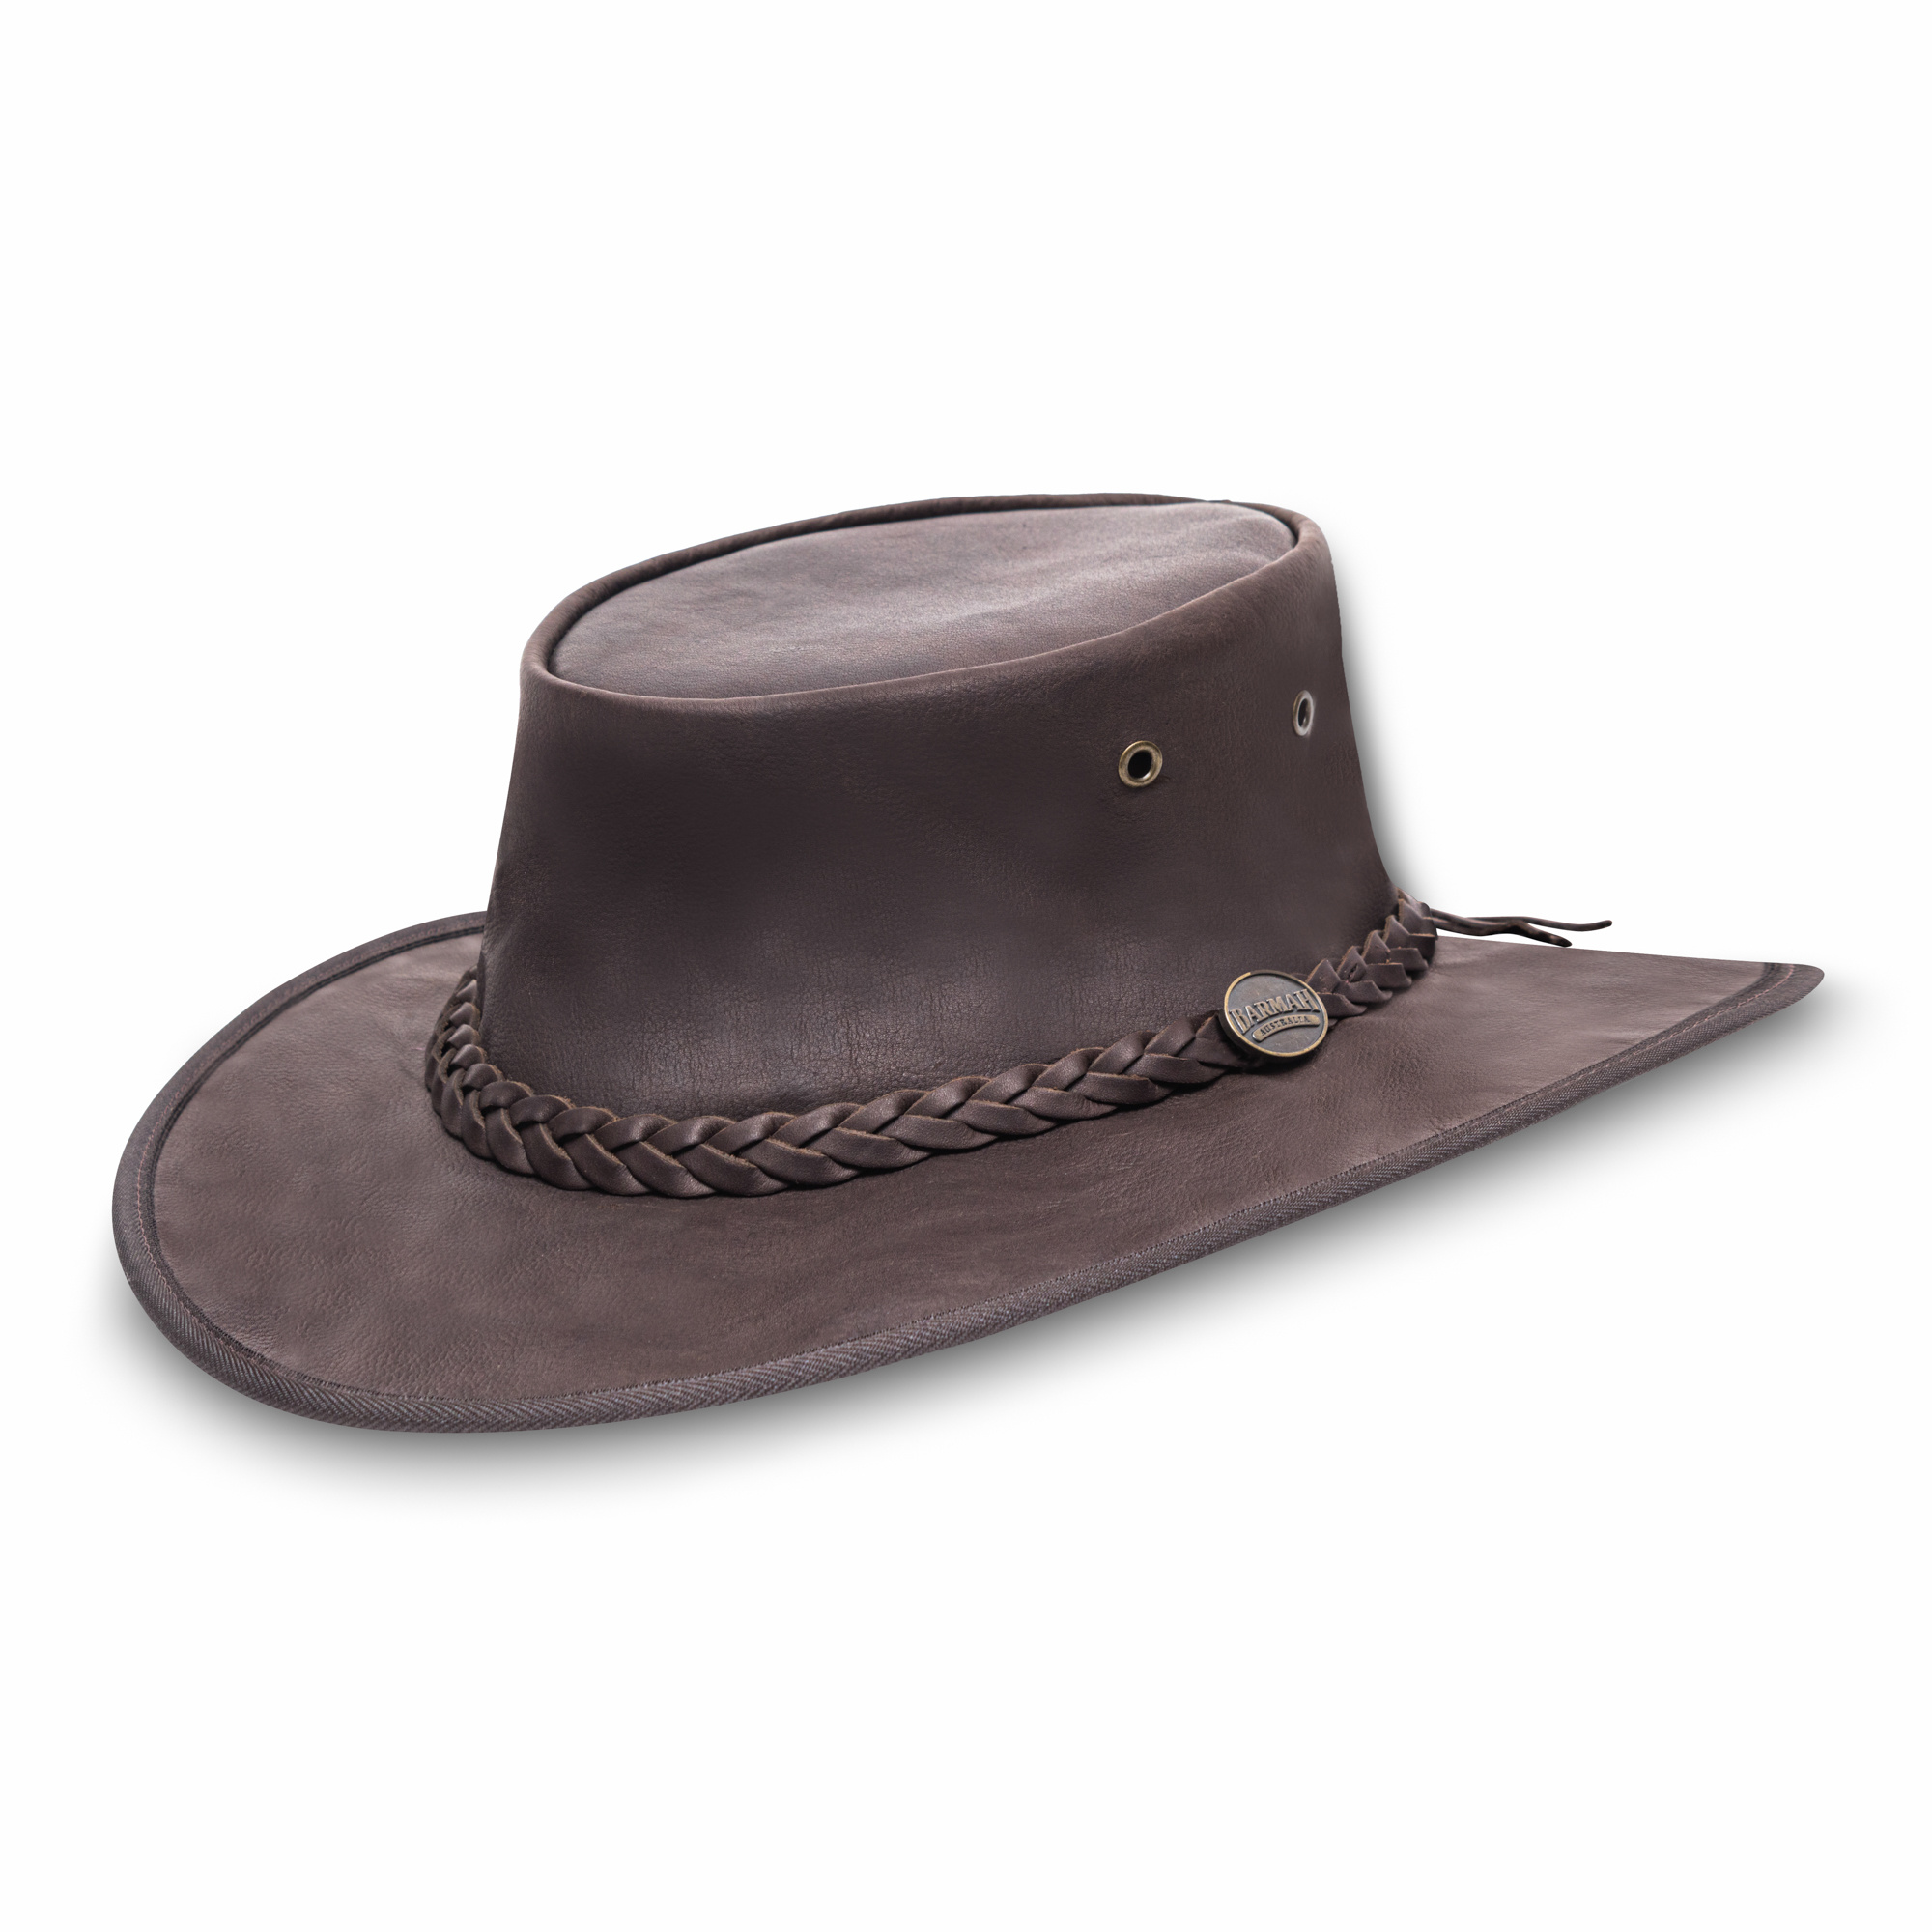 Barmah Sundowner Leather Outback Hat - Black SUNDOWNER ROO BROWN XL